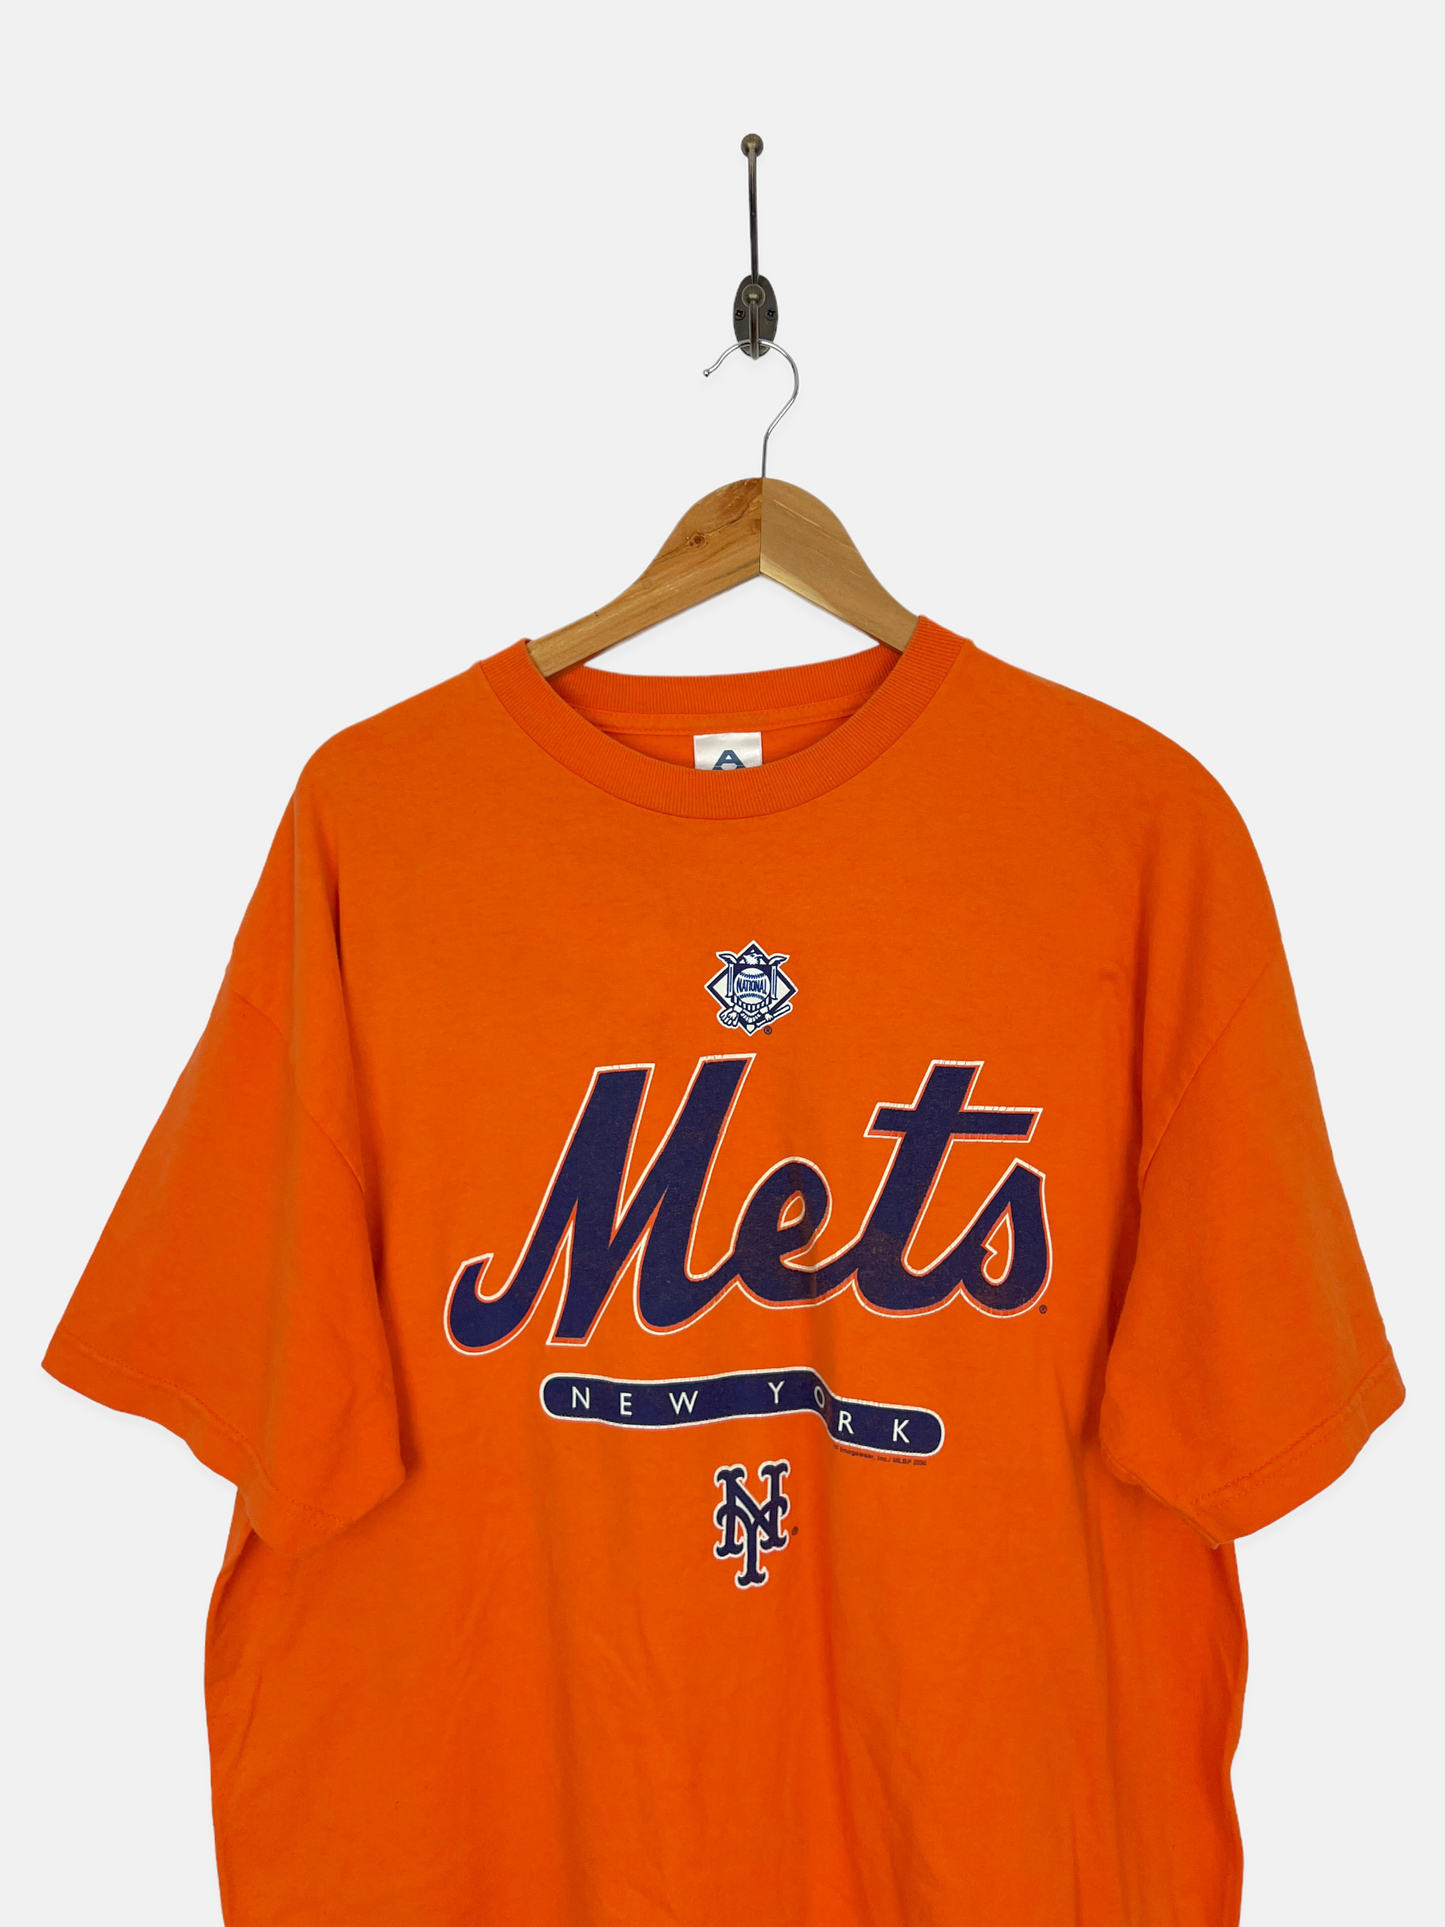 New York Mets MLB Vintage T-Shirt Size L-XL